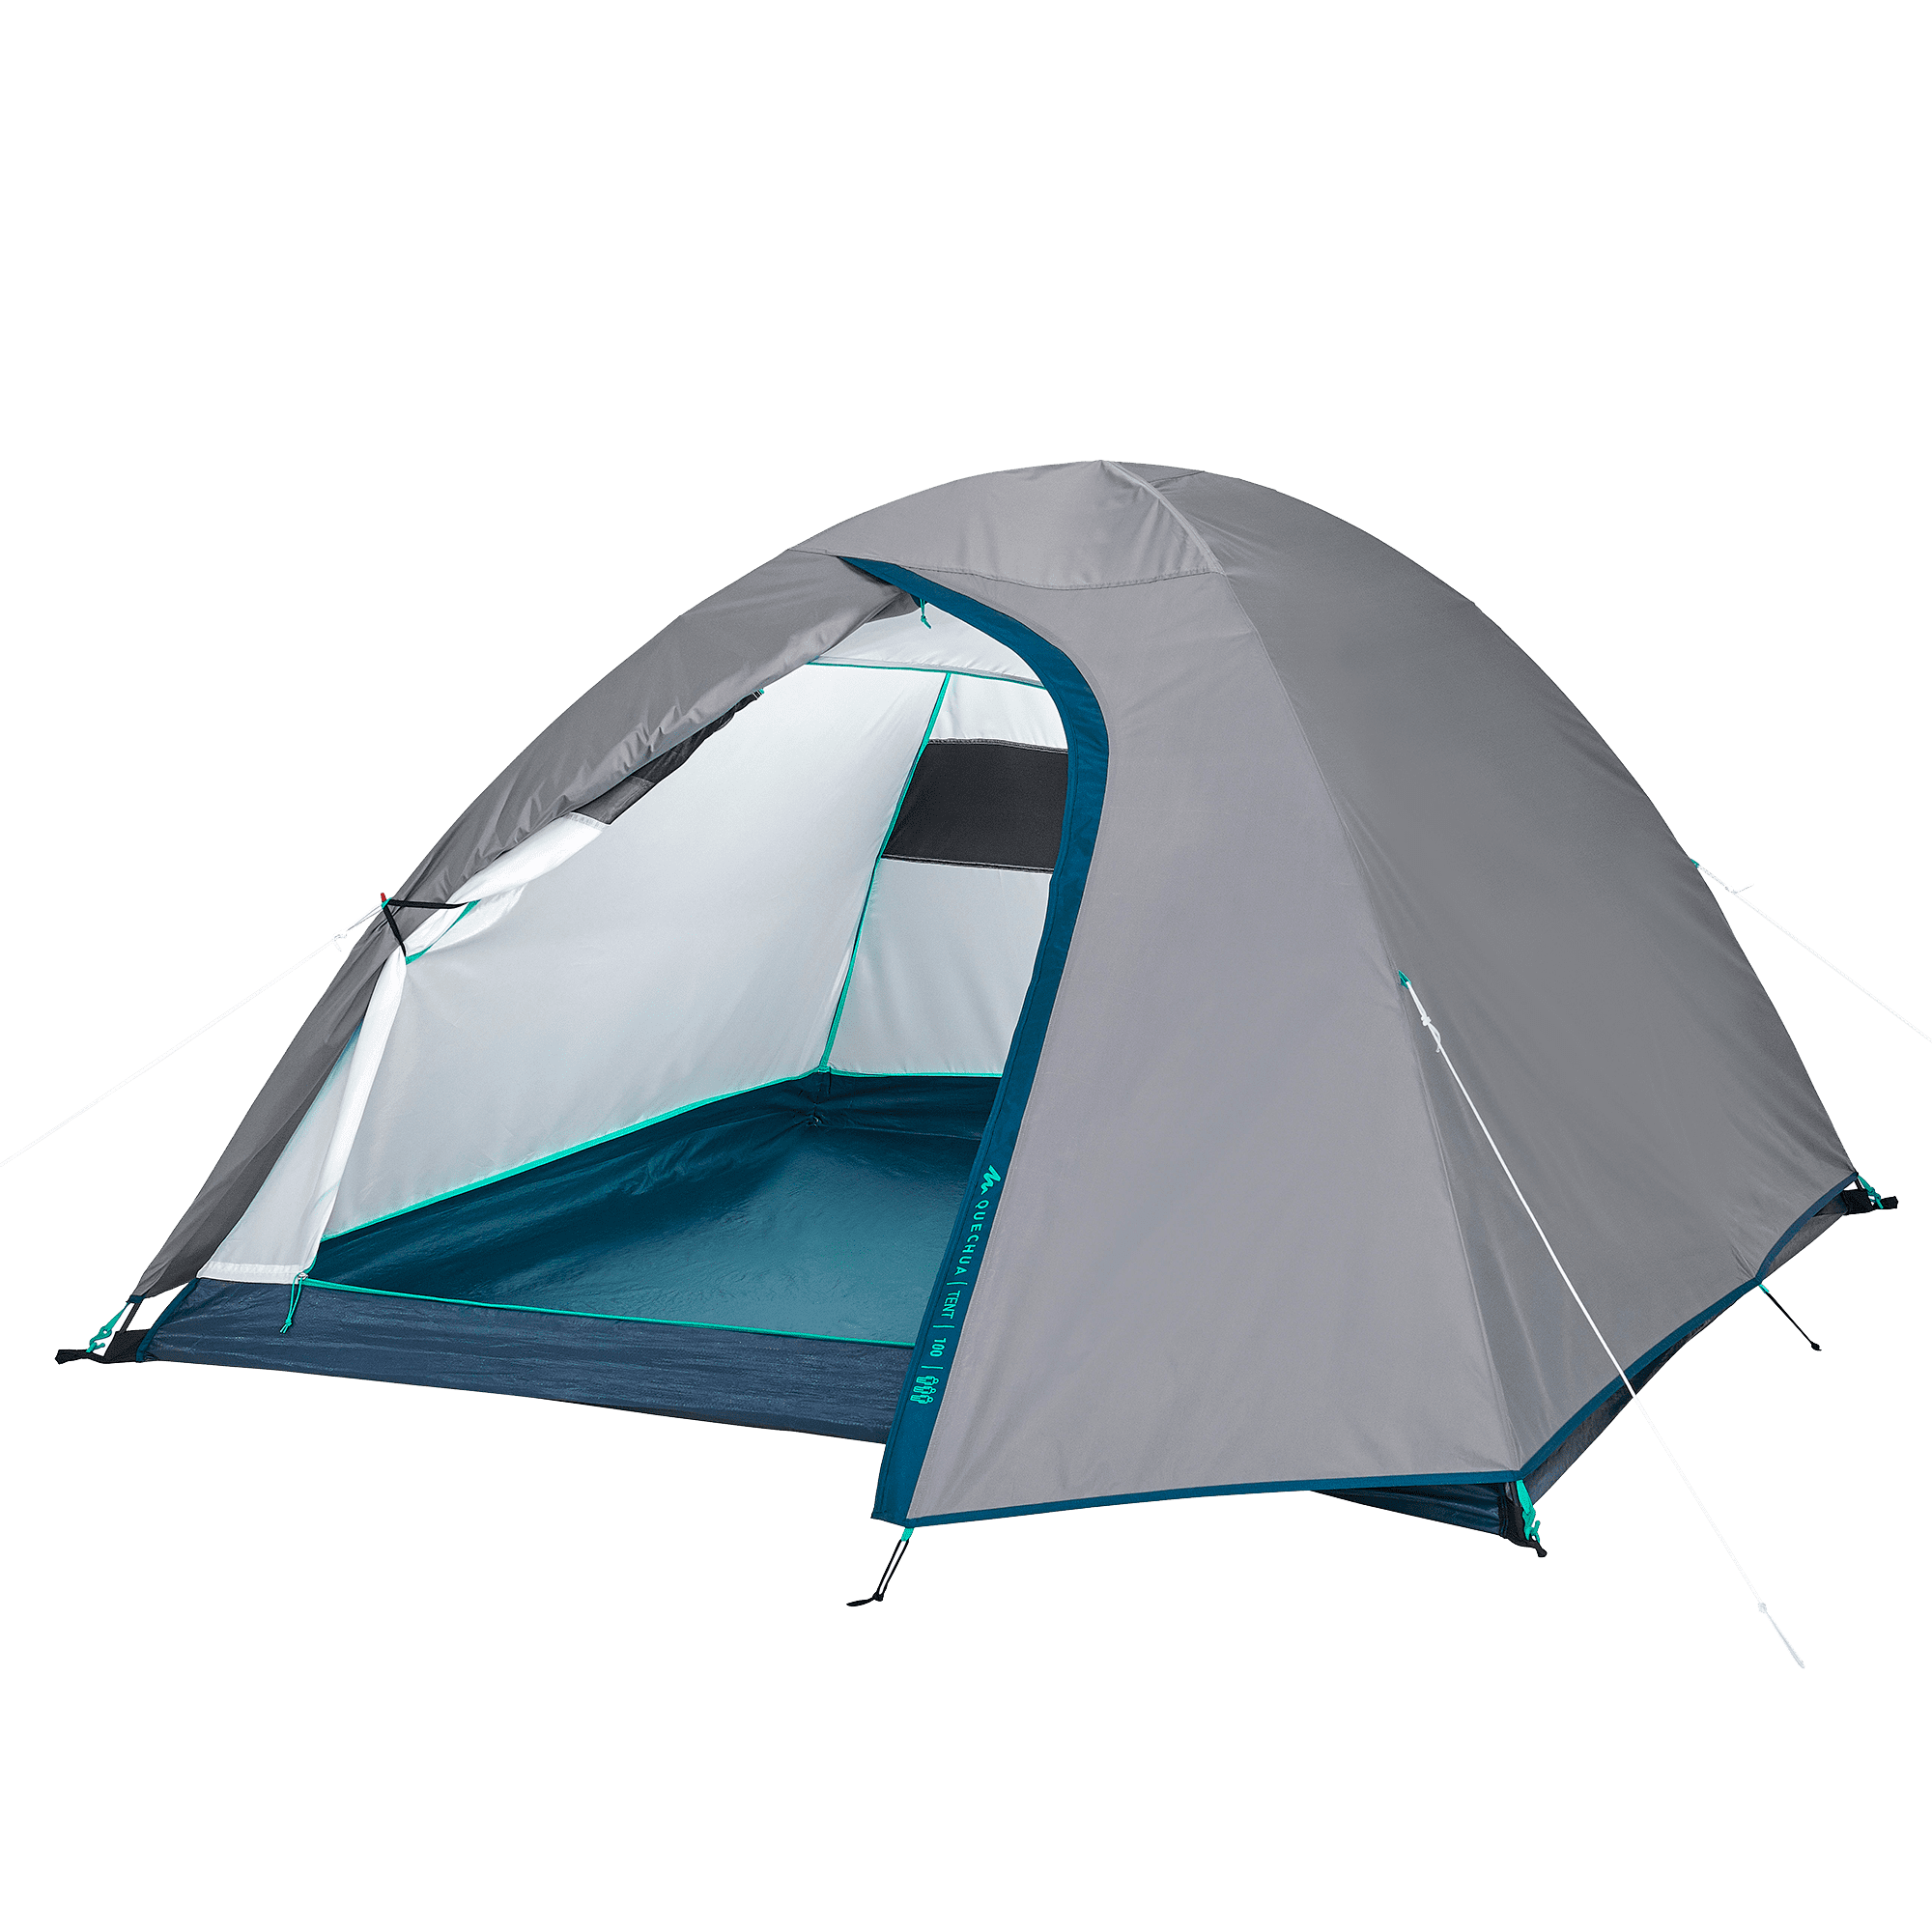 Decathlon Quechua MH100, 3 Person Dome Tent, Gray - Walmart.com